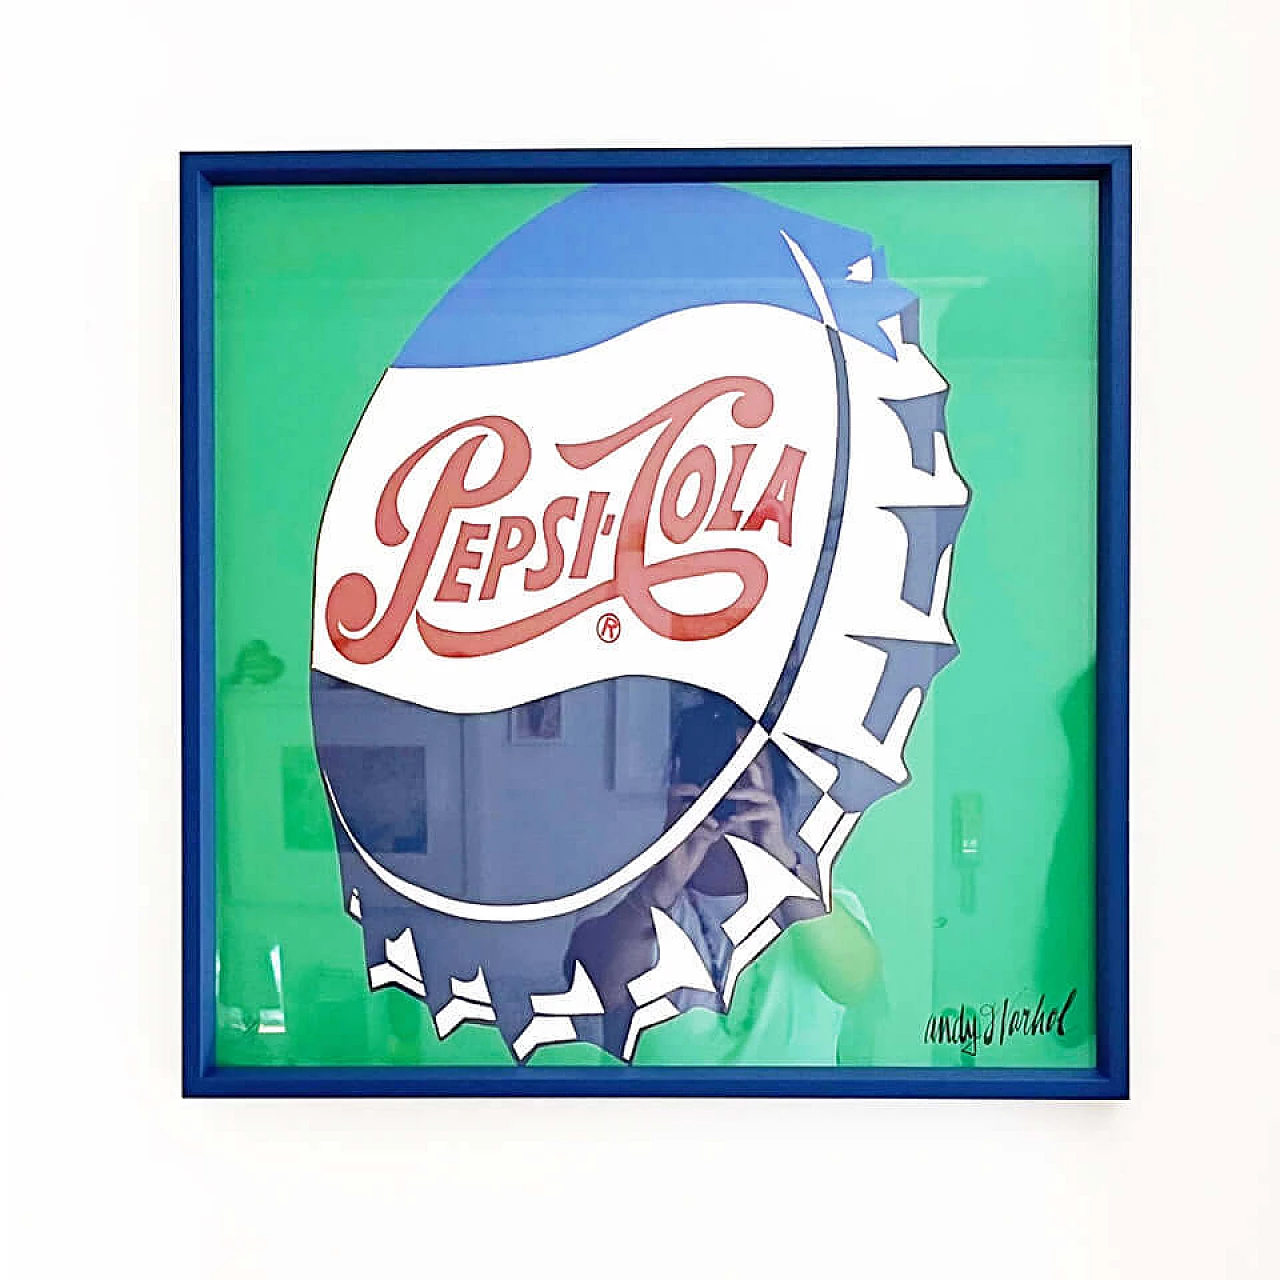 Andy Warhol, Pepsi Cola, lithography 6